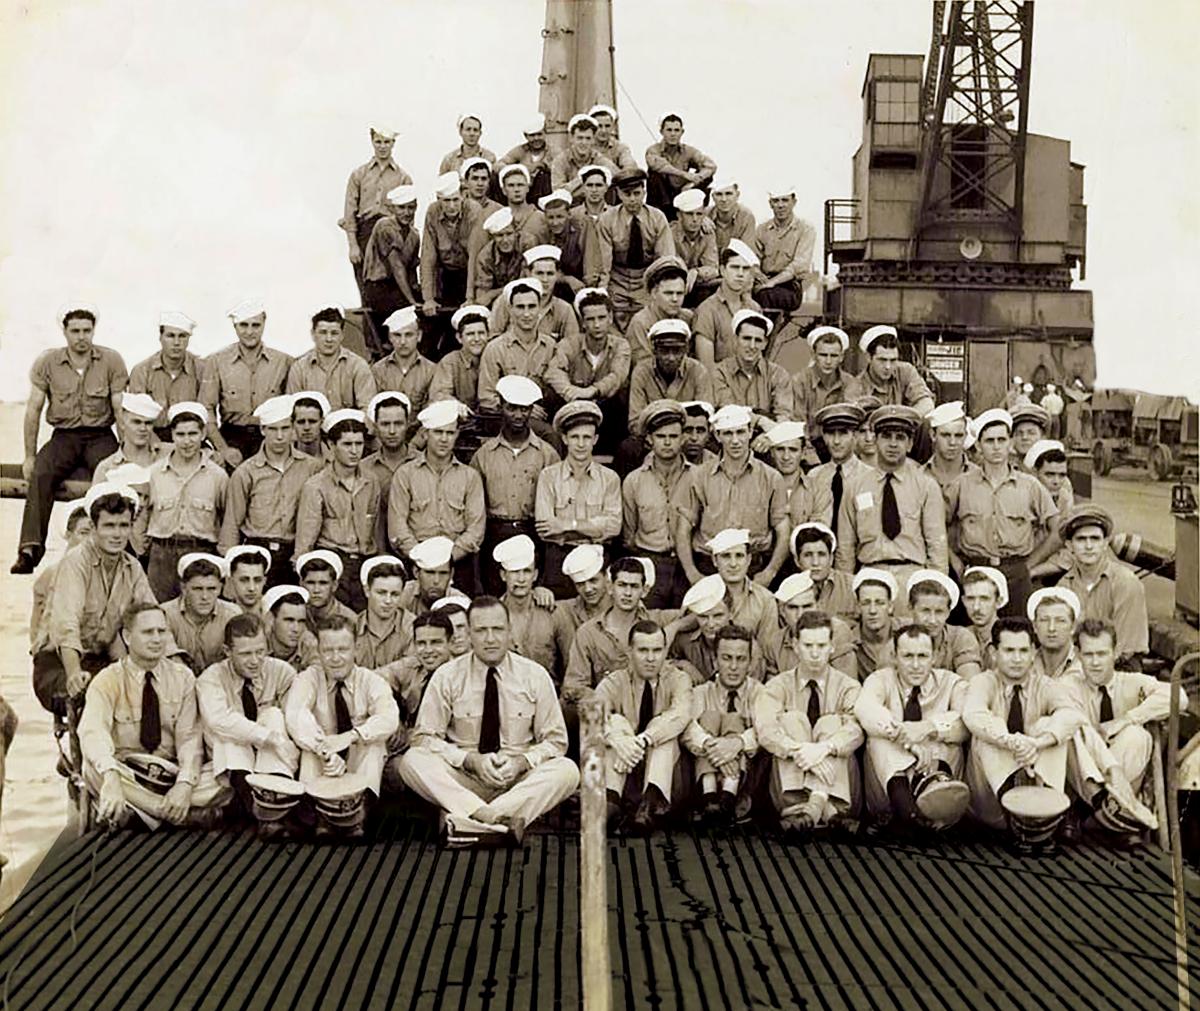 Crew of the USS Seahorse posing on their submarine